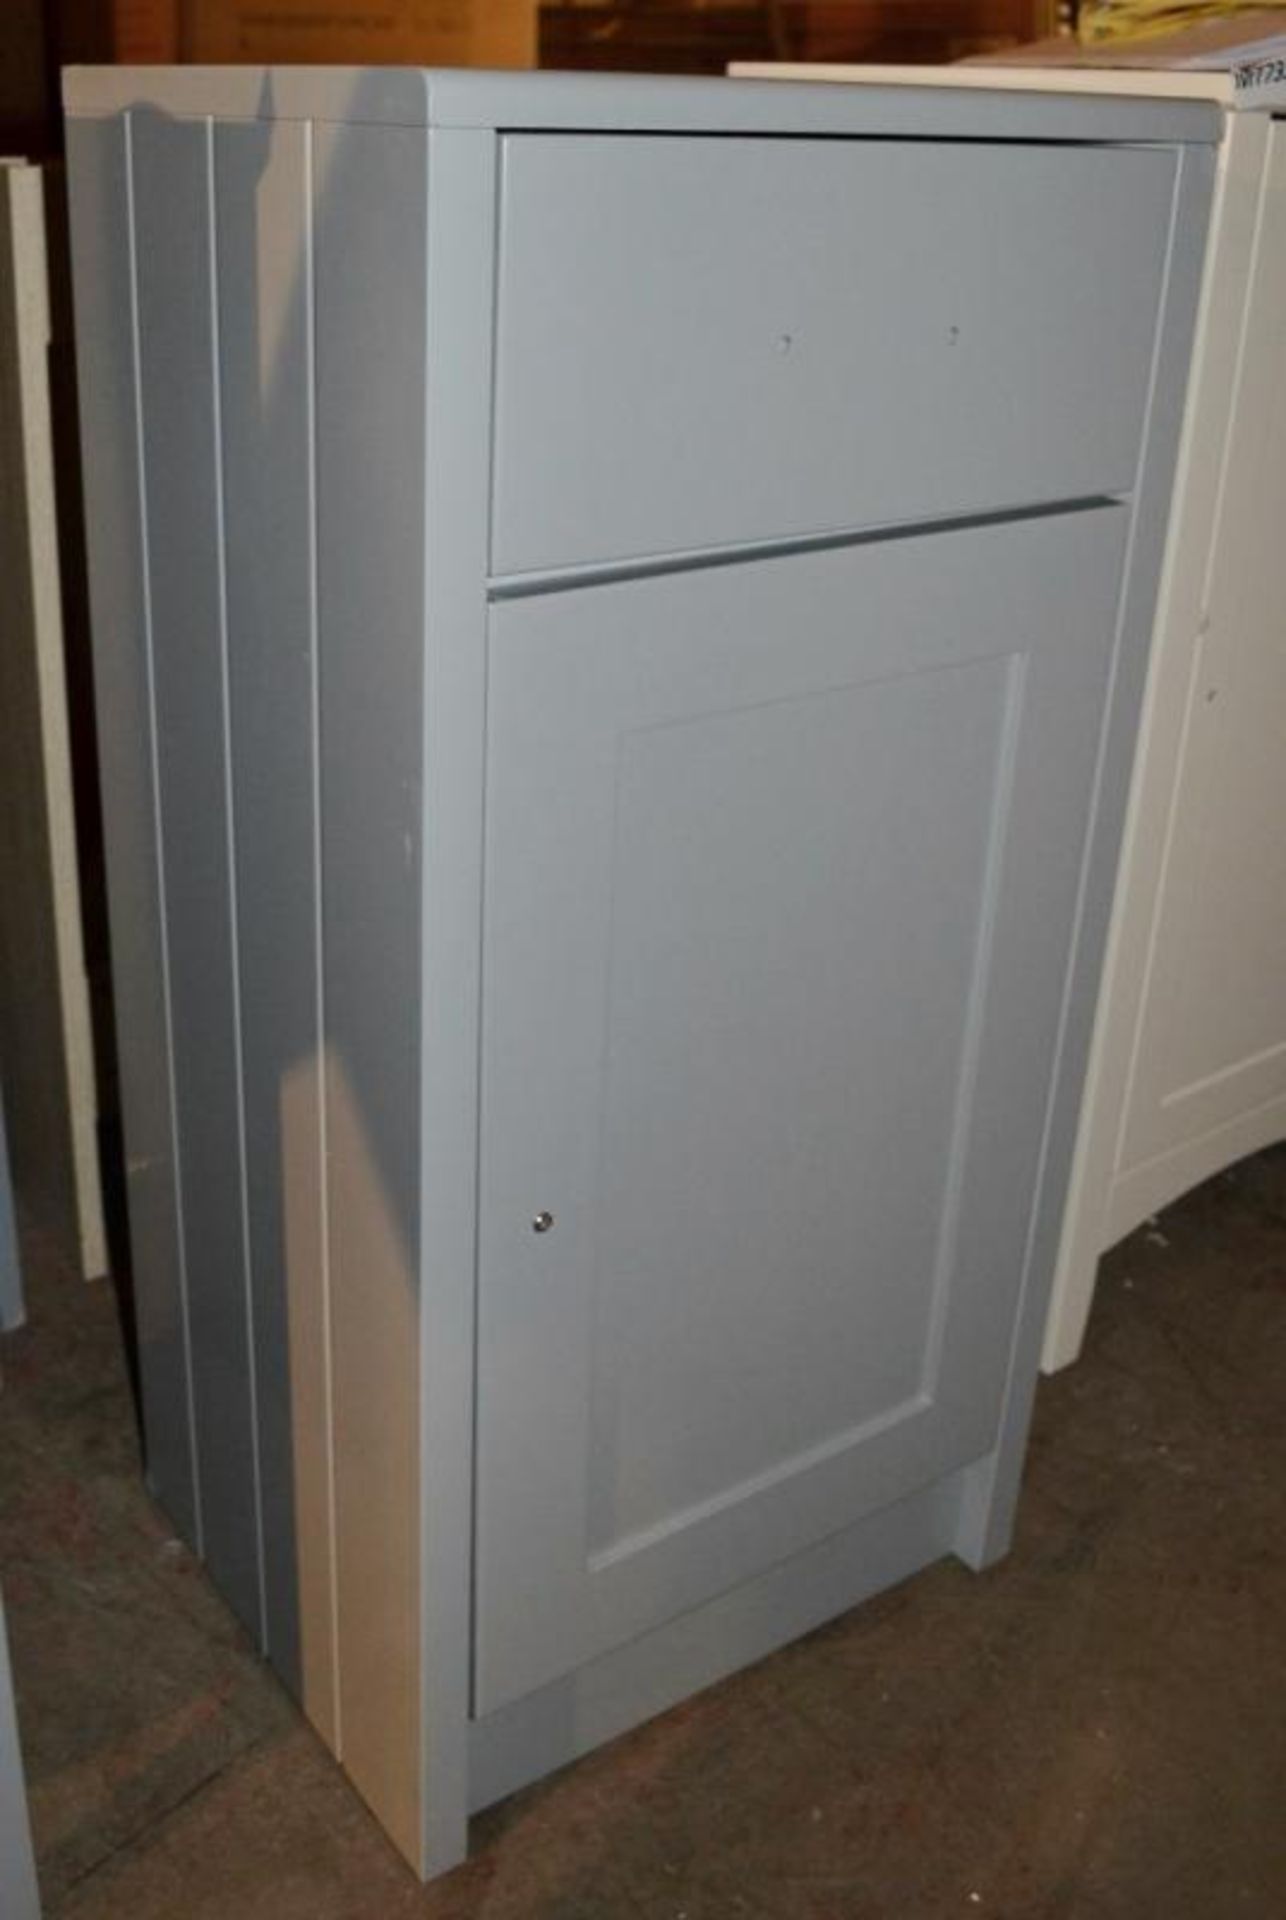 1 x Winchester 1-Door, 1-Drawer Bathroom Storage Unit In Light Grey - Ex-Display Stock - Dimensions: